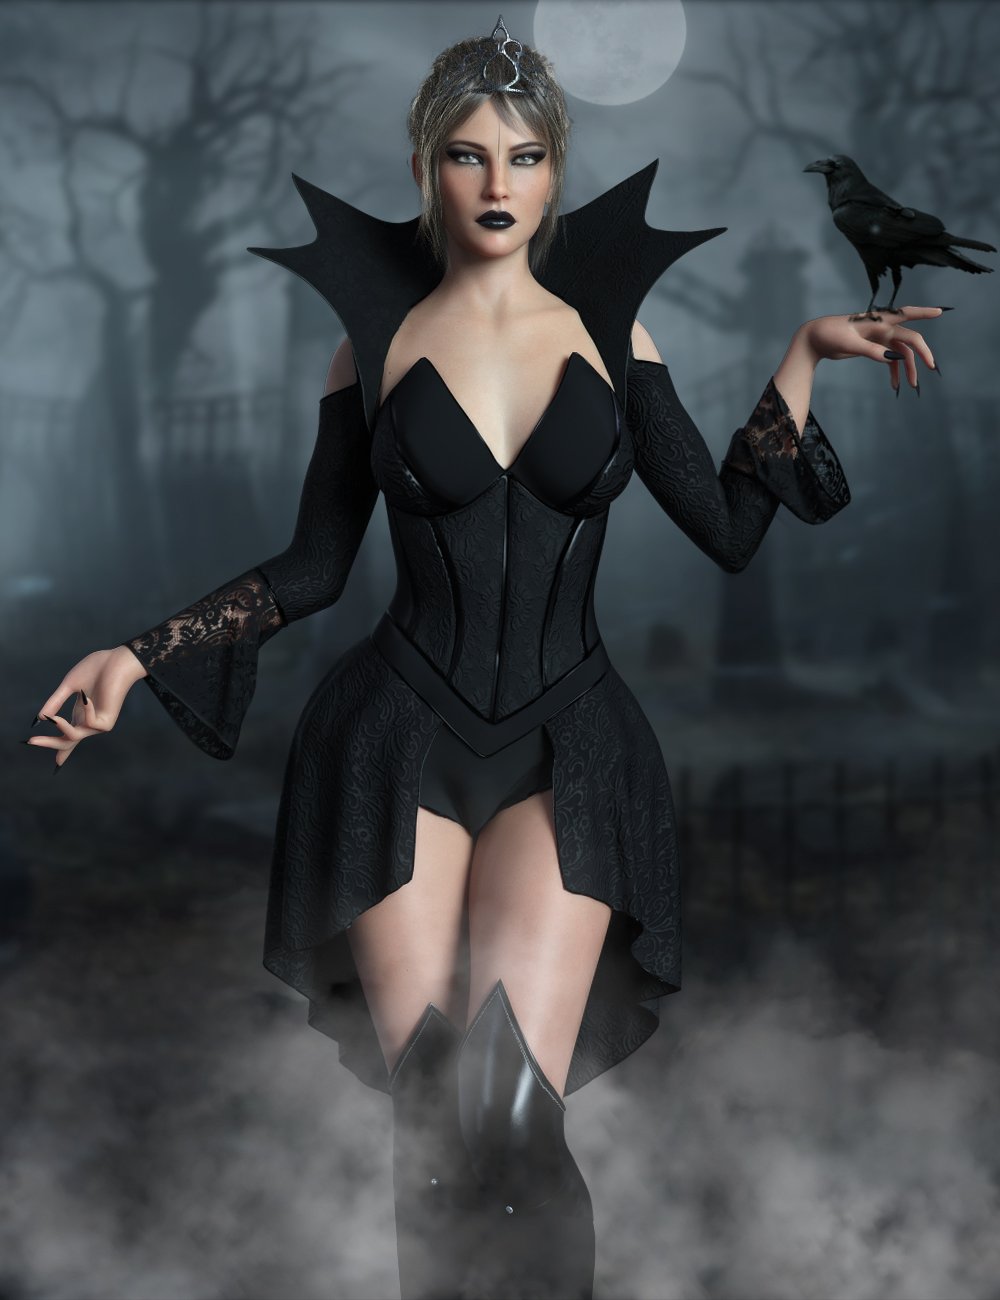 dForce Dark Princess Outfit Set for Genesis 8 and 8.1 Females by: Mytilus3dLab, 3D Models by Daz 3D